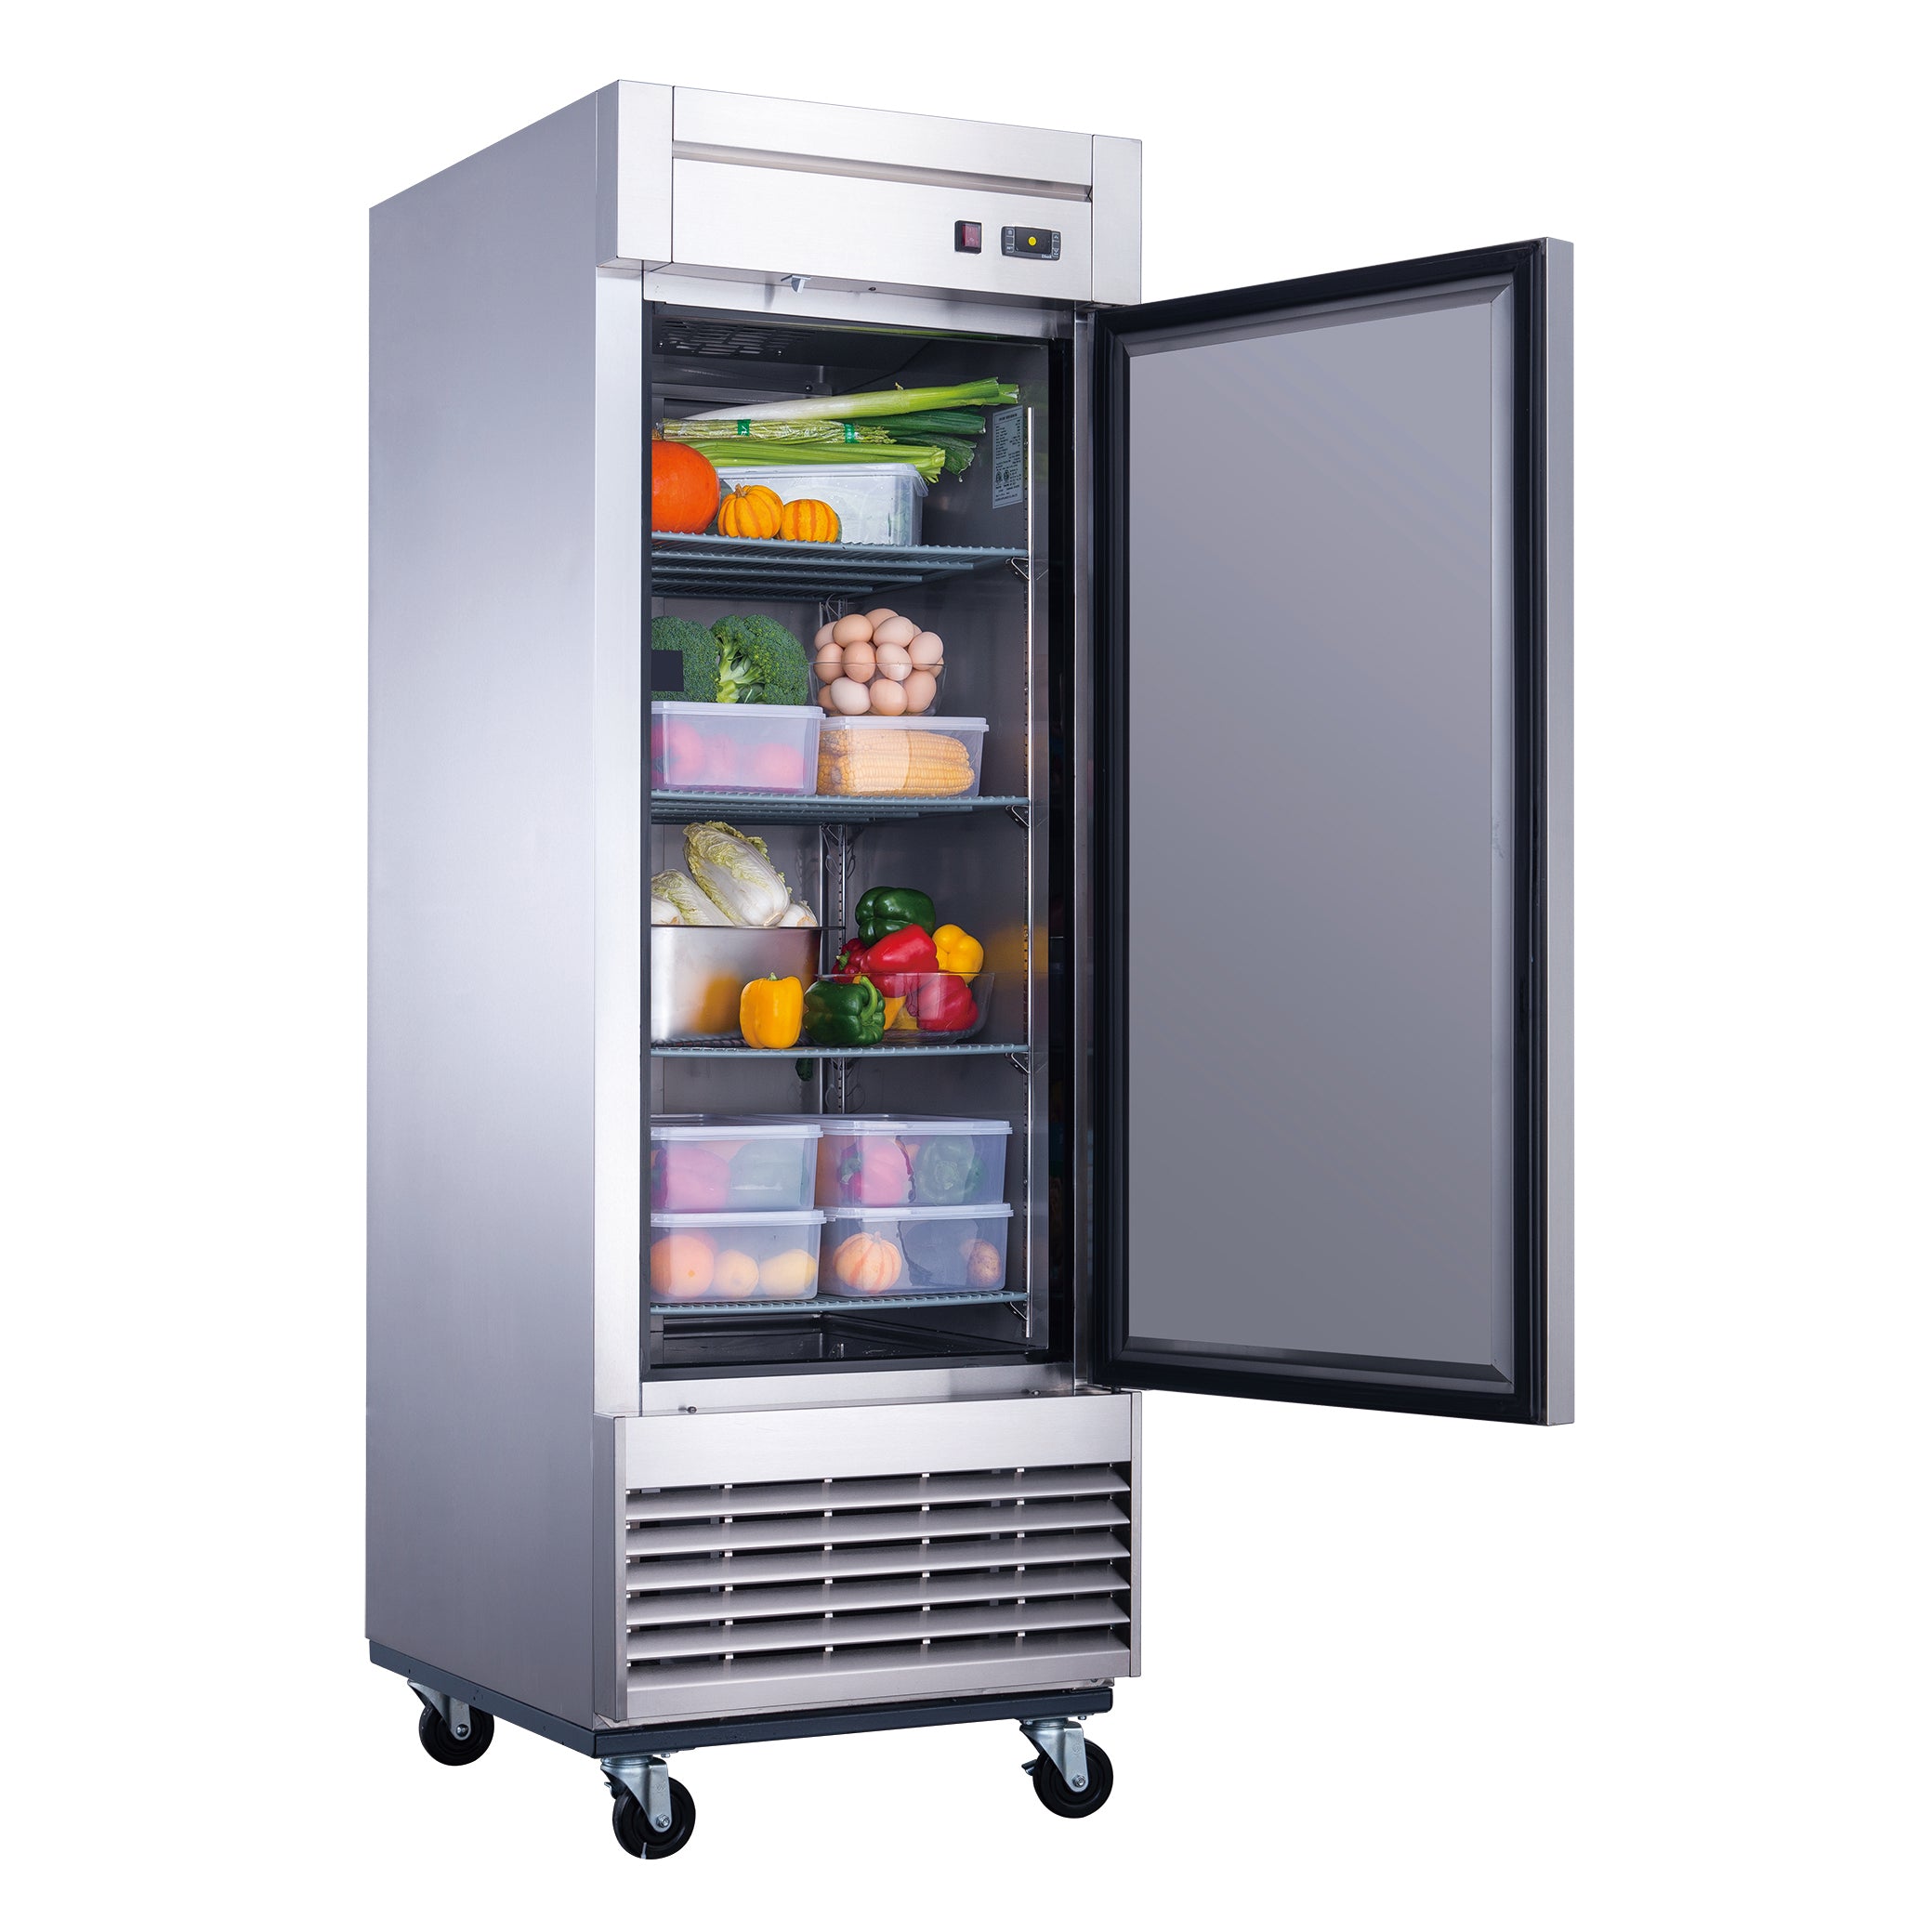 reach-in-refrigerators-reach-in-refrigerator